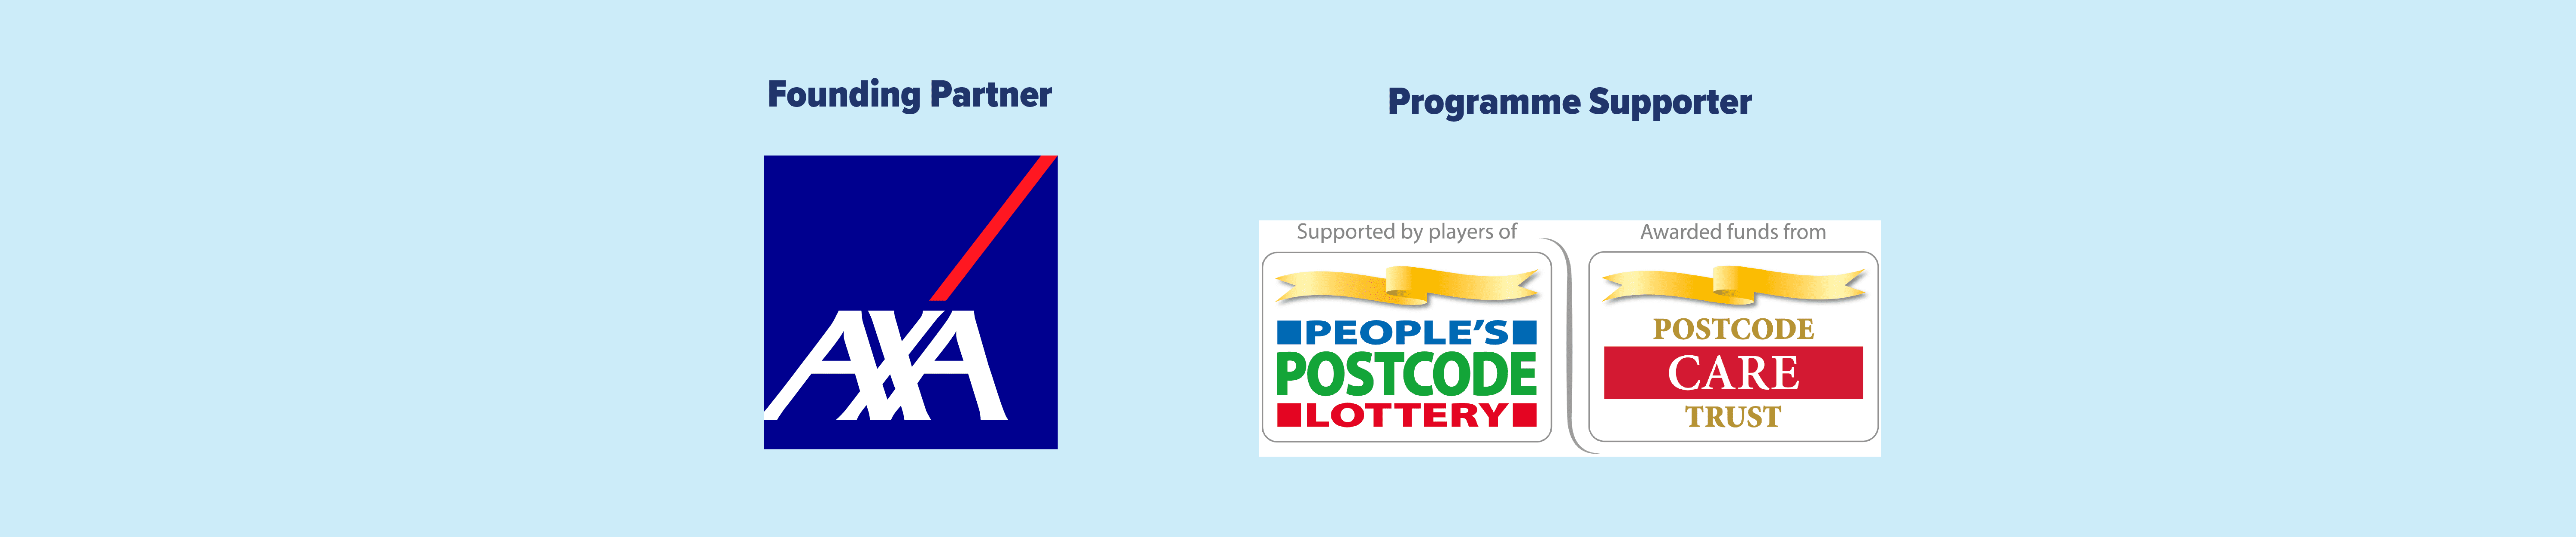 AXA, People's Postcode Lottery and Postcode Care Trust logos.